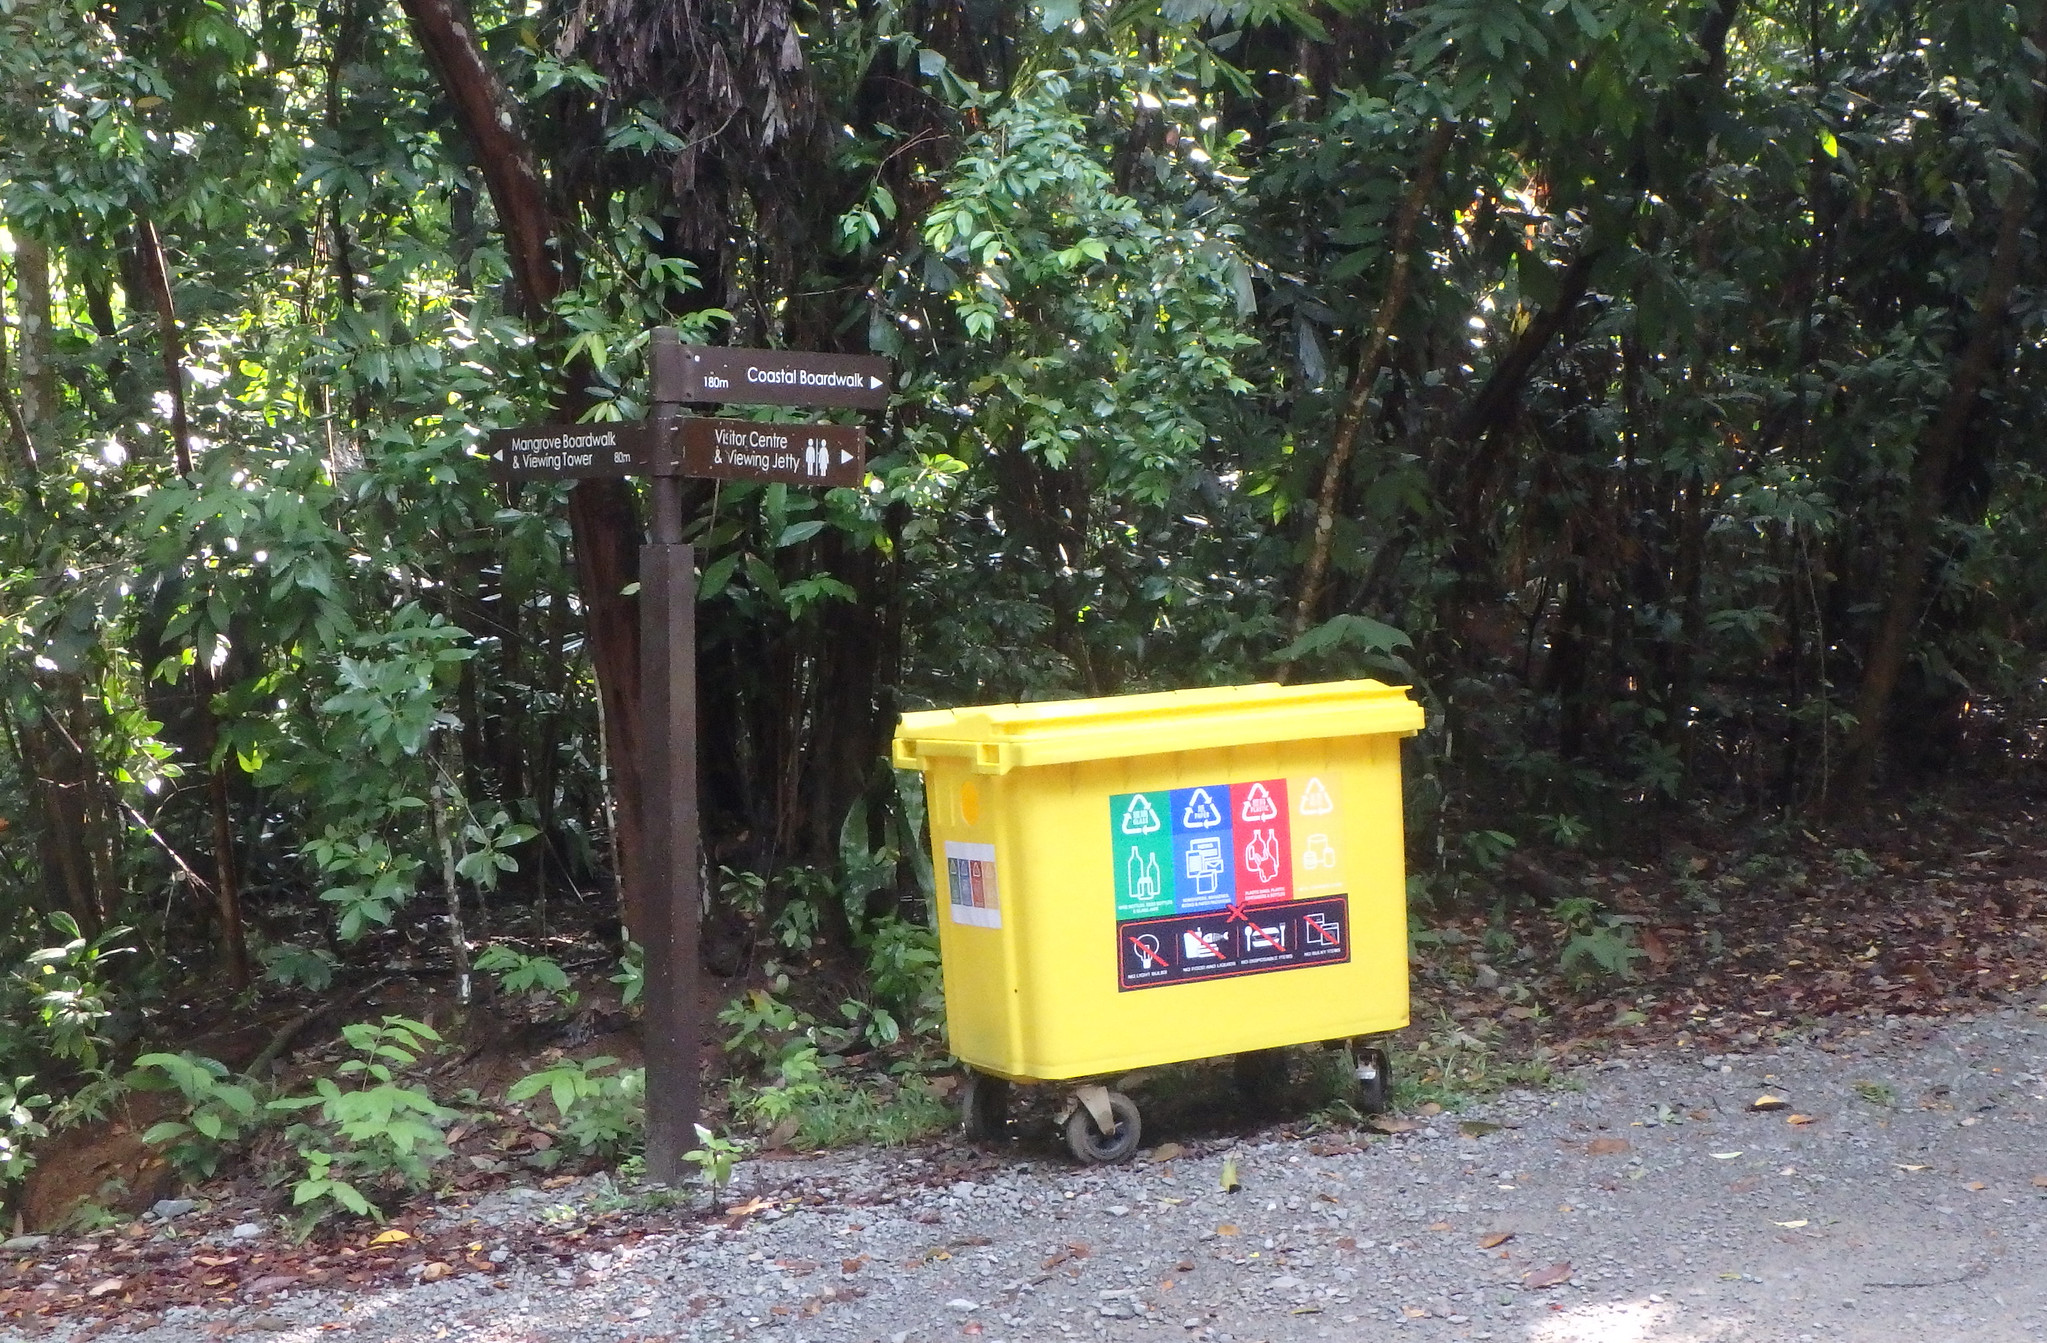 Recycling bin at Chek Jawa thanks to NParks